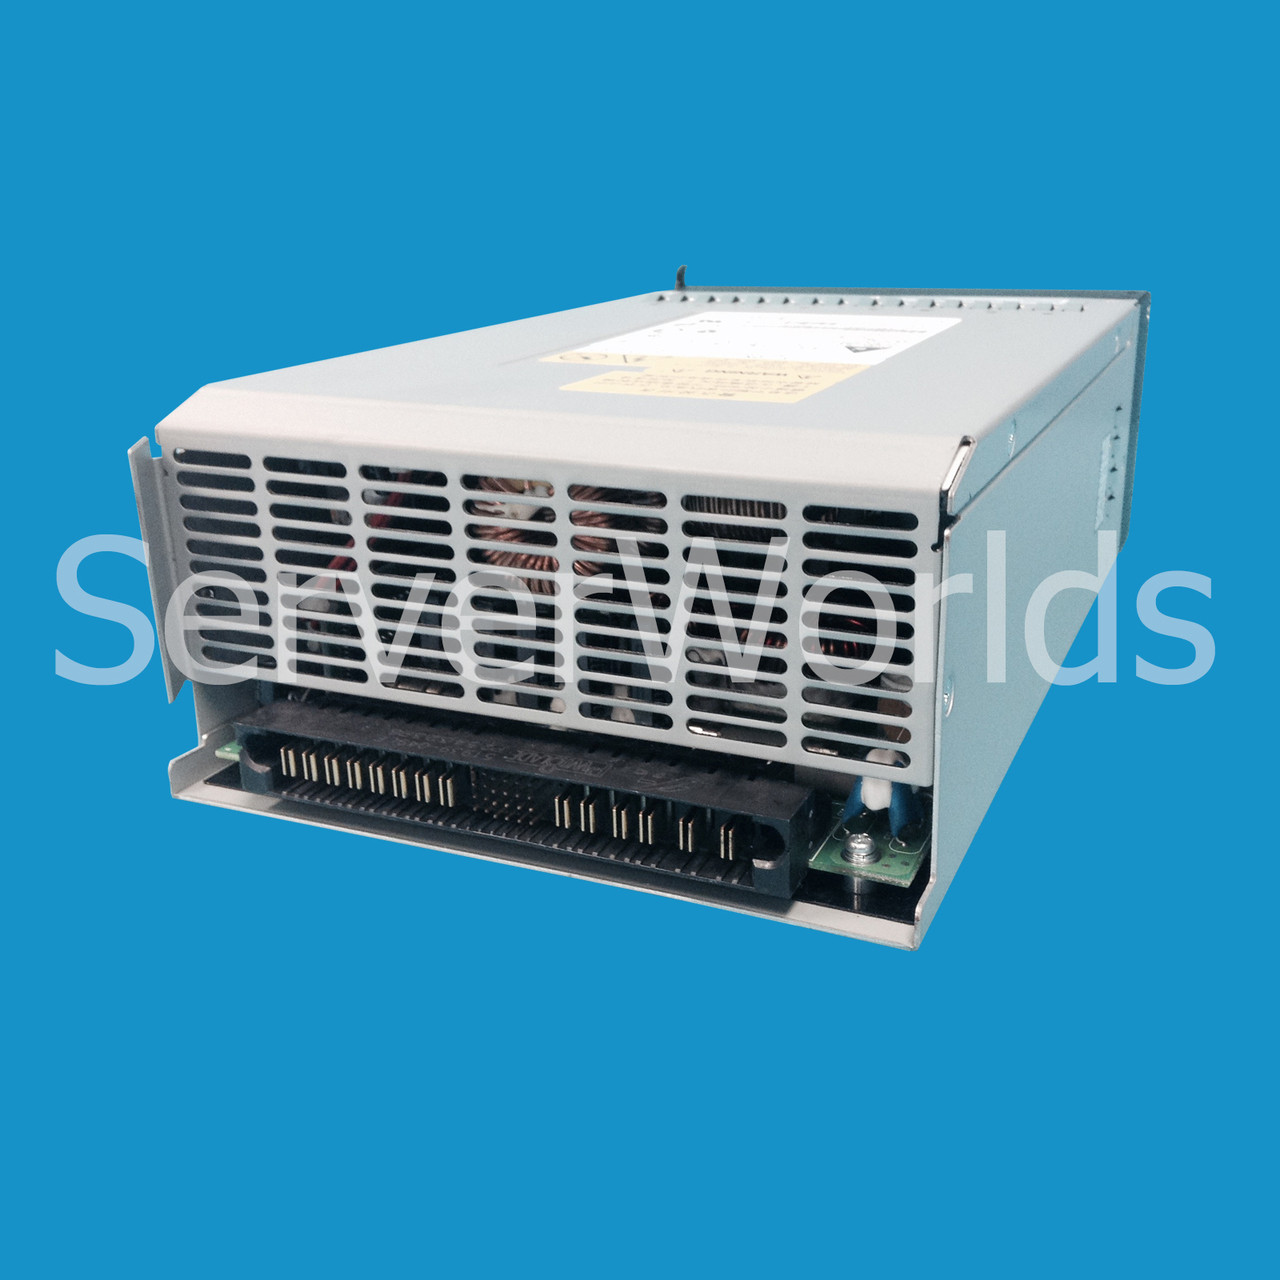 IBM 90P3714 Bladecenter T 1300W AC Power Supply 